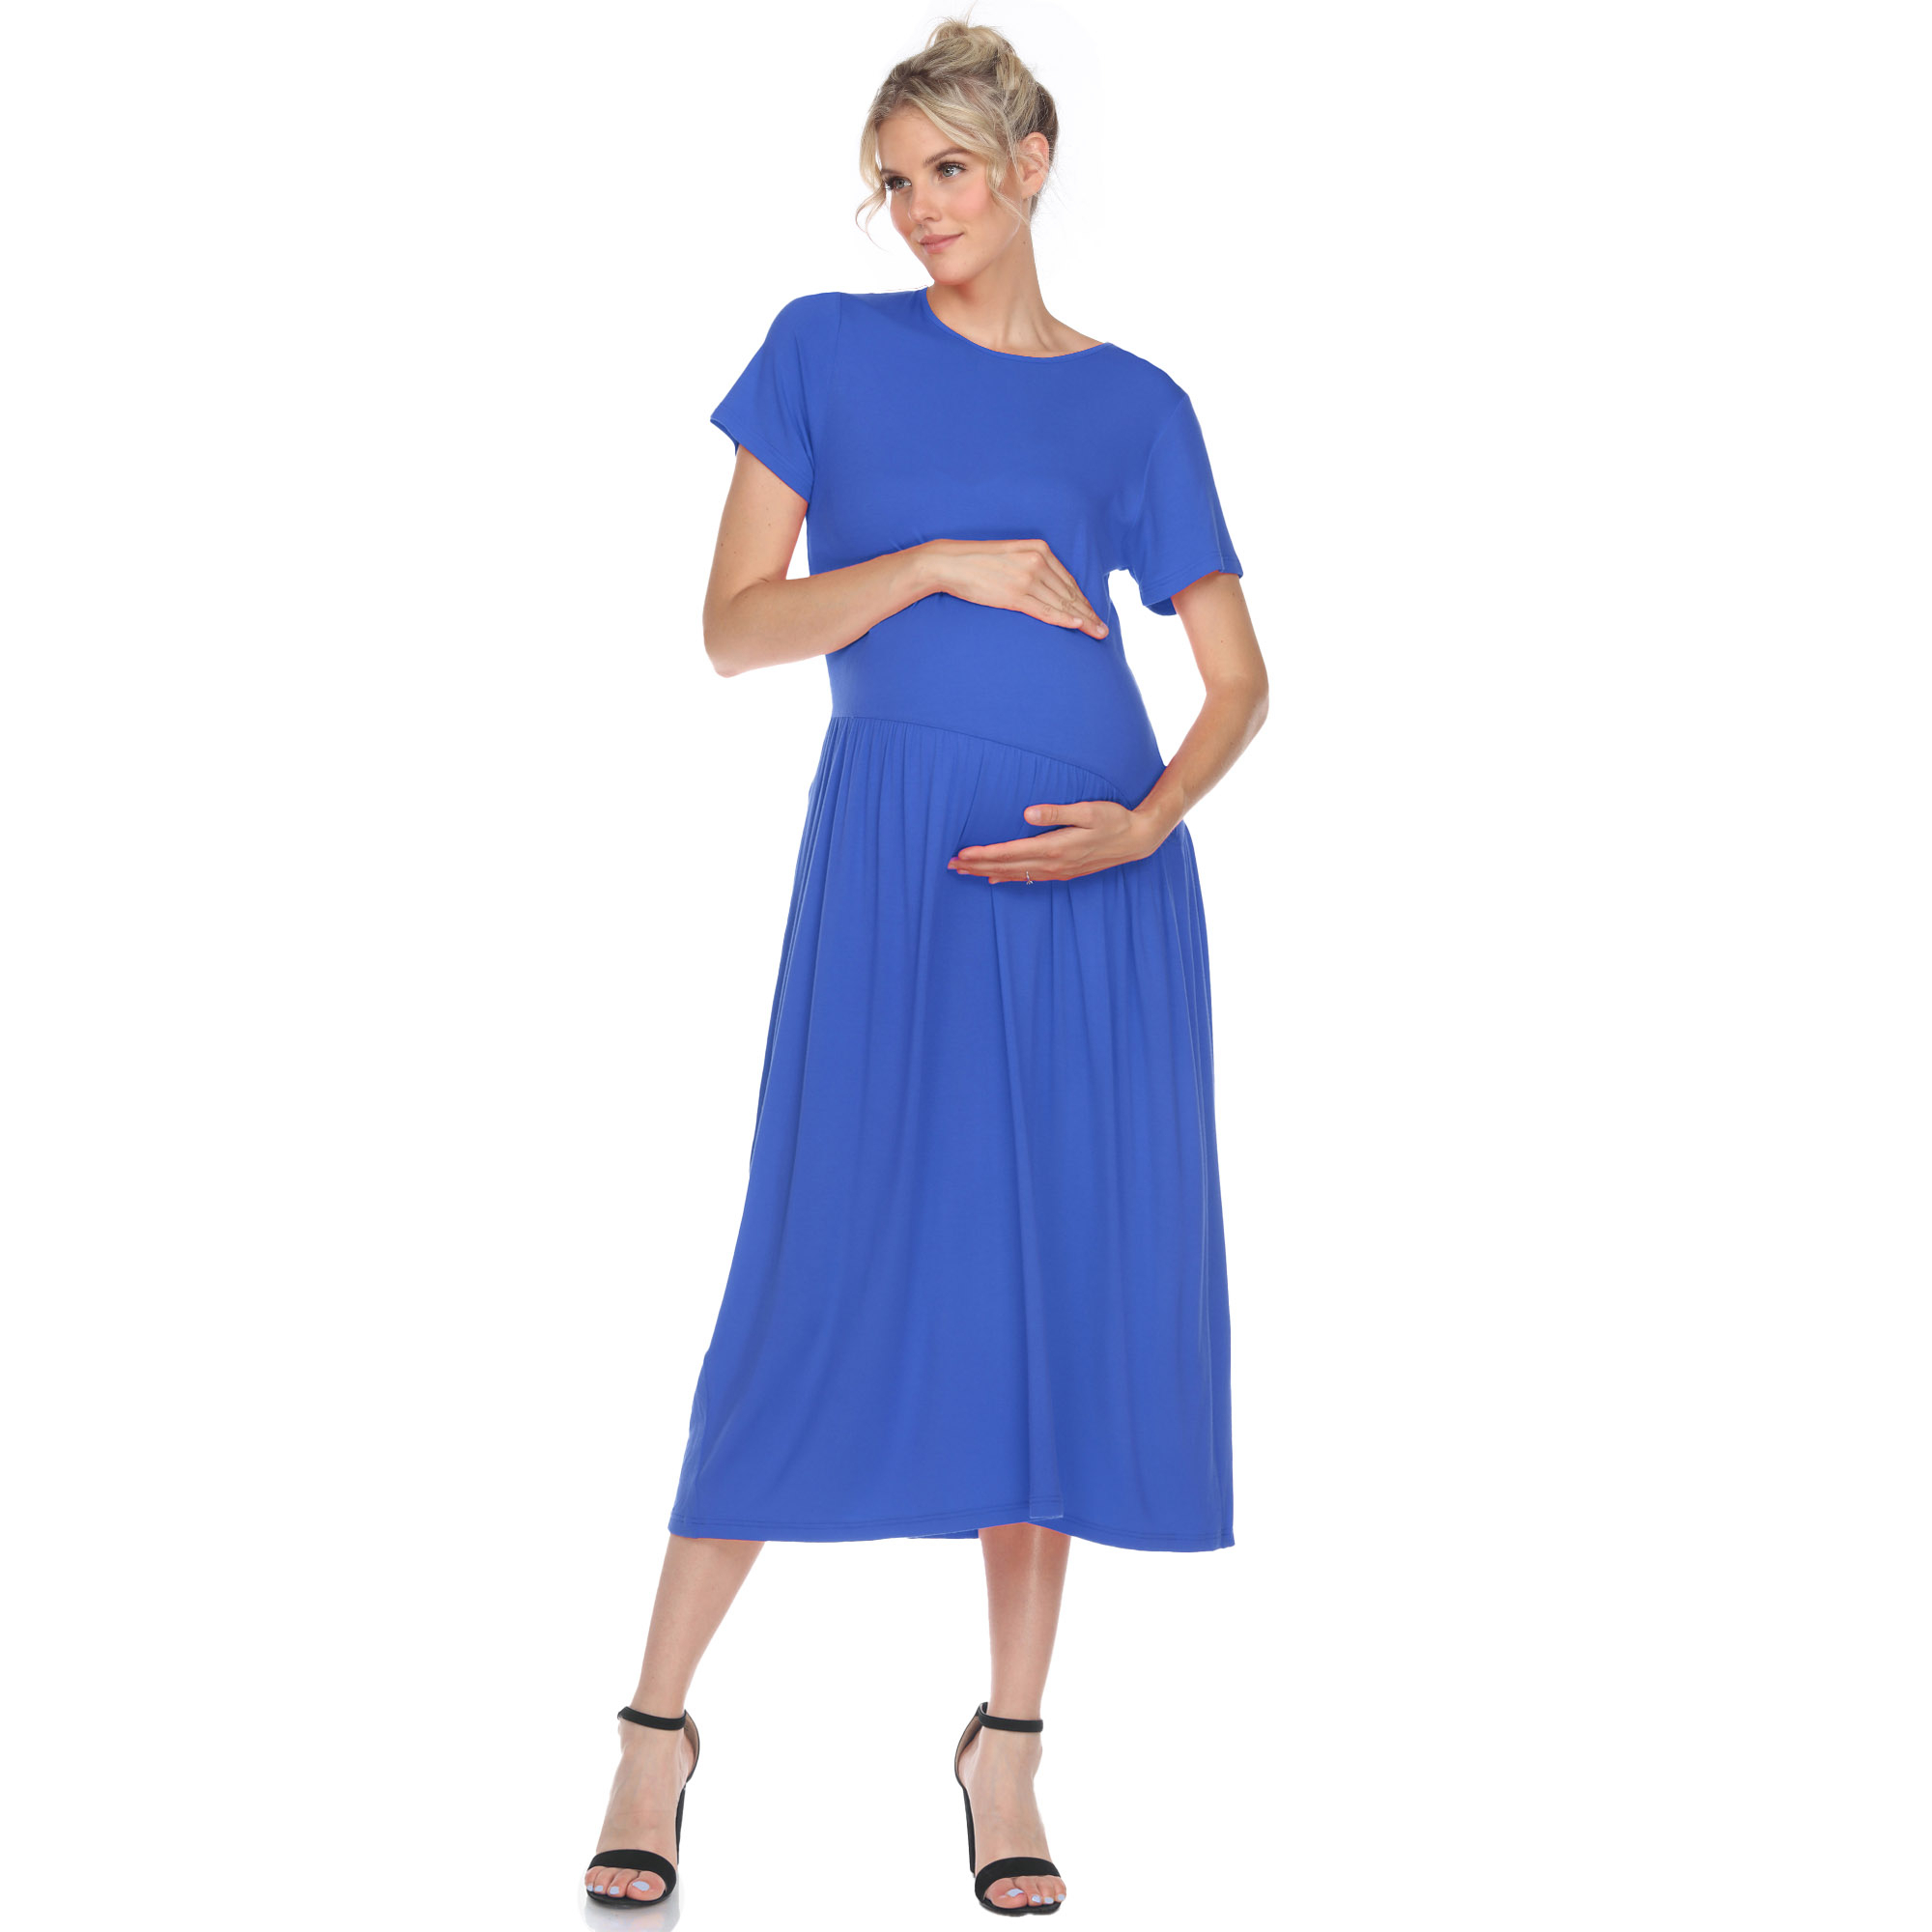 White Mark Womenâs Maternity Short Sleeve Maxi Dress - Royal, Small